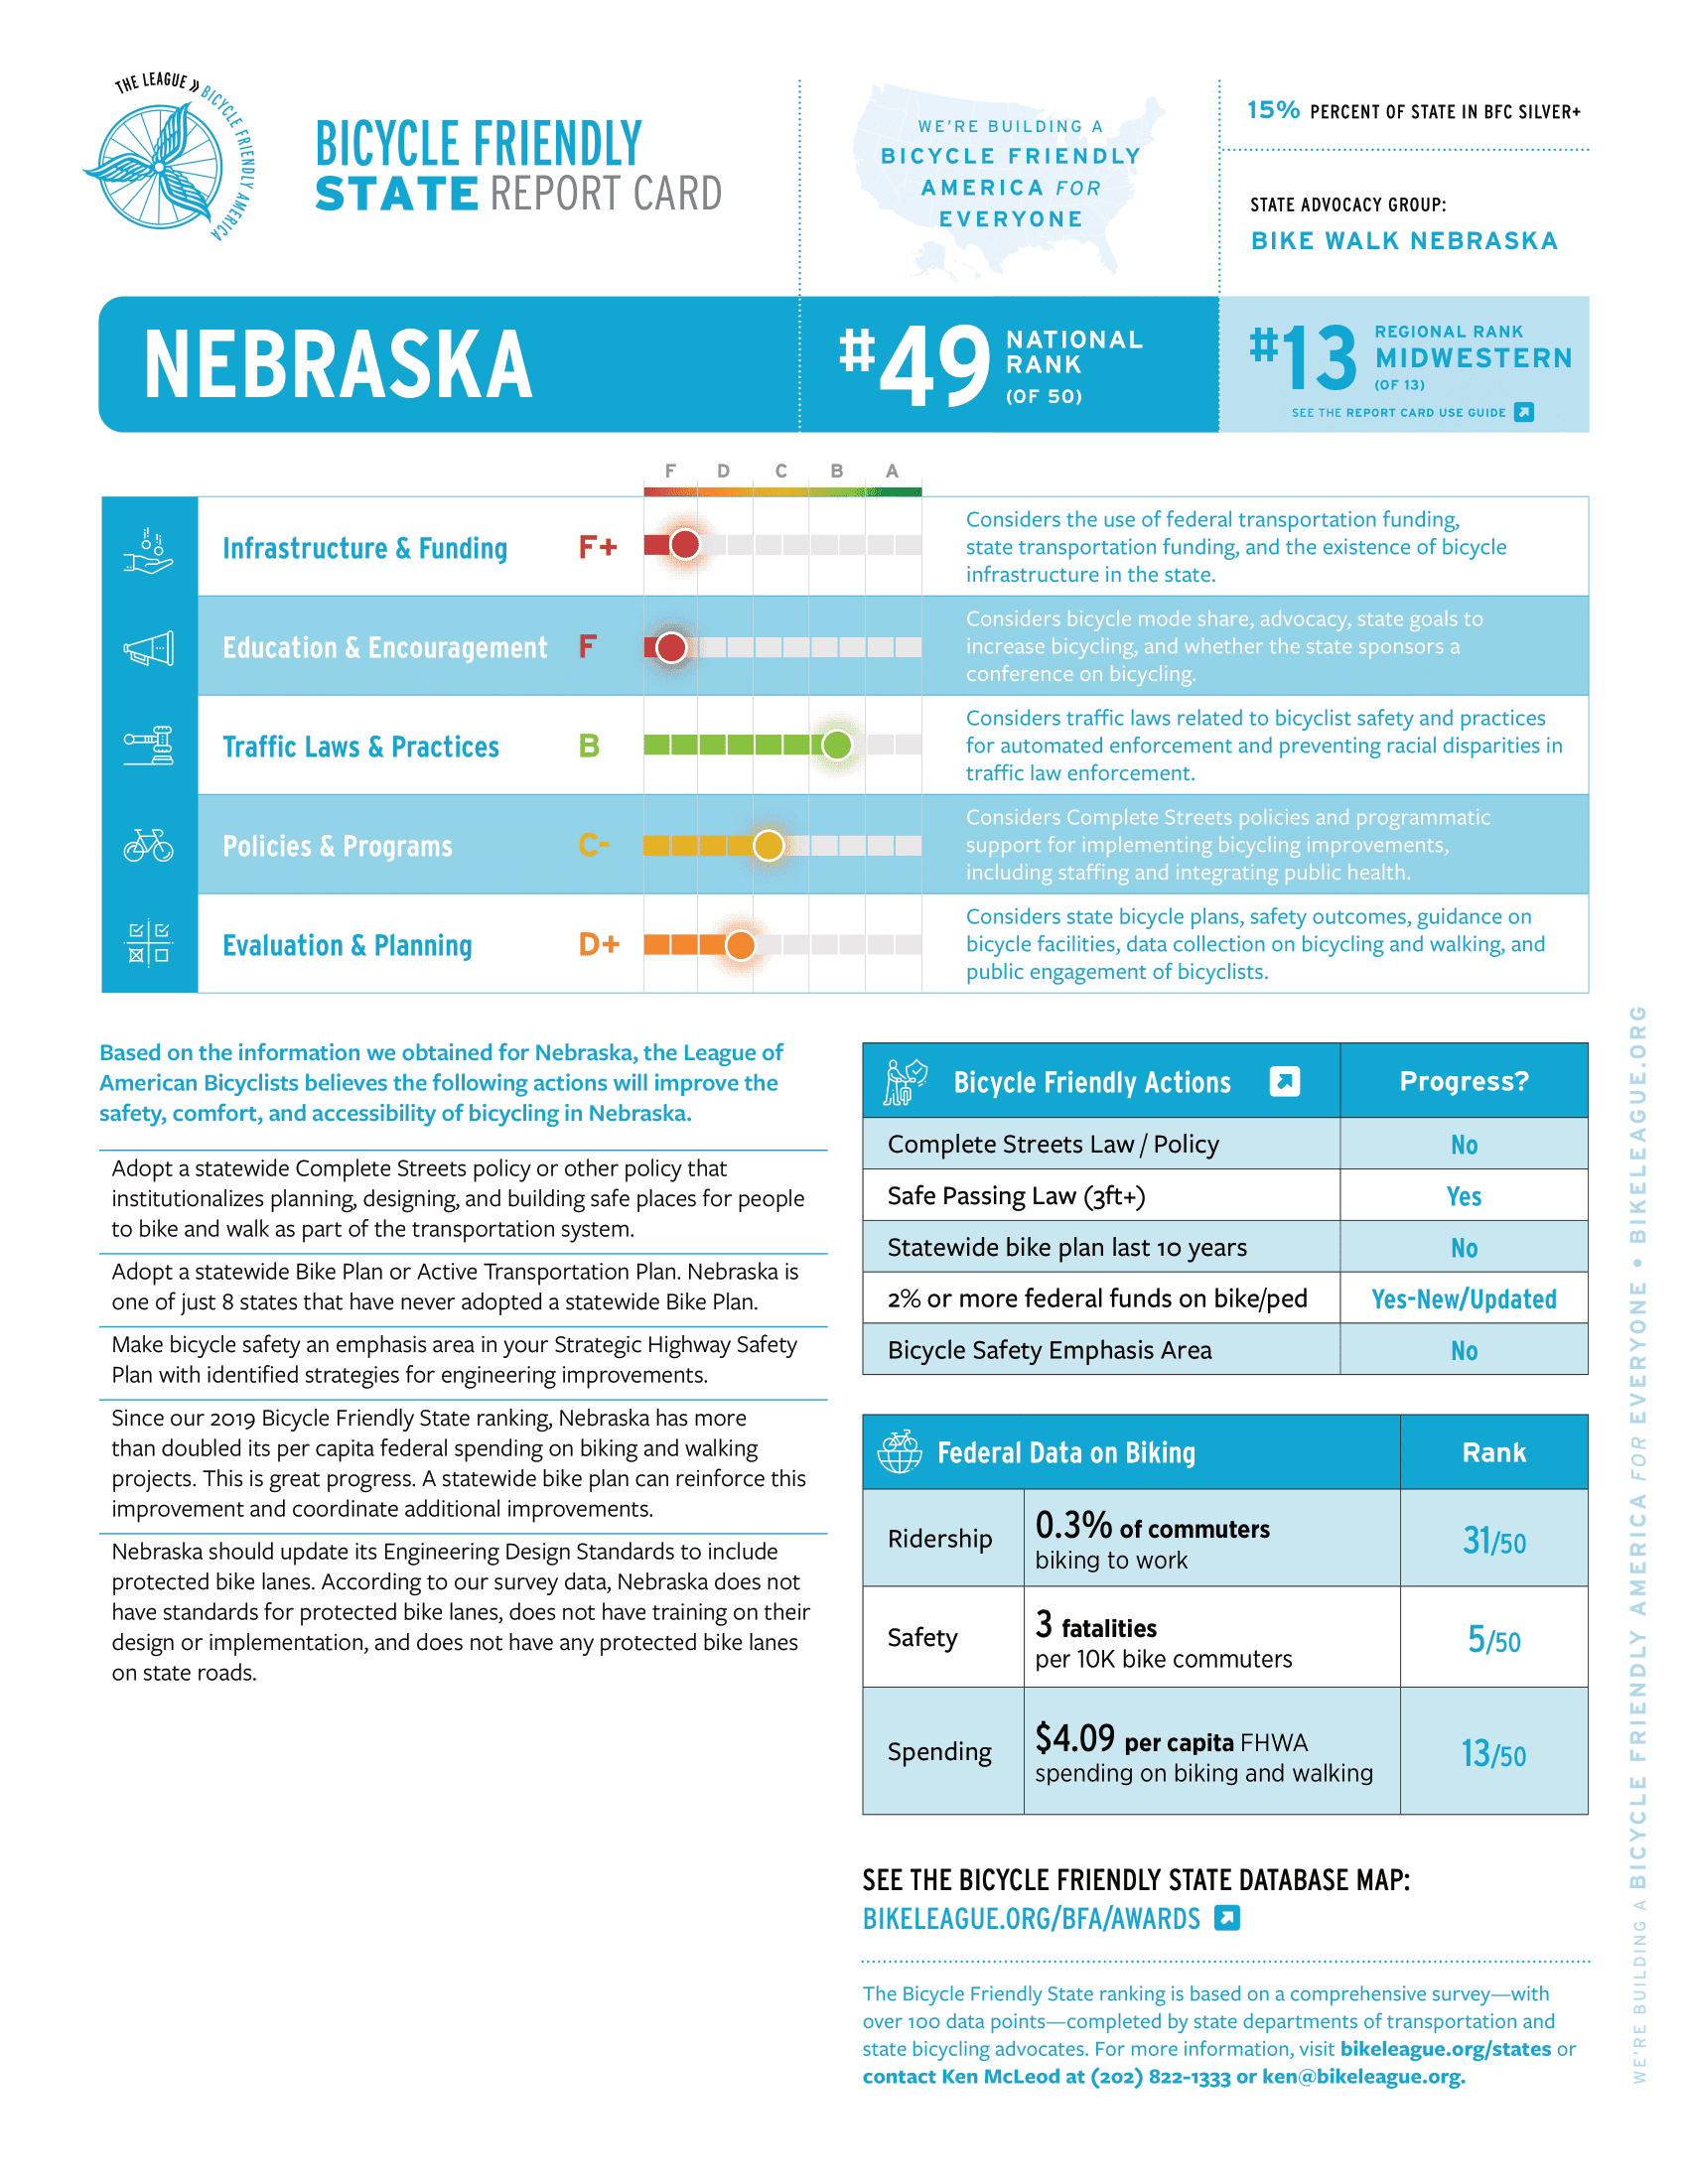 Nebraska ranks 49th in new Bicycle Friendly State rankings.